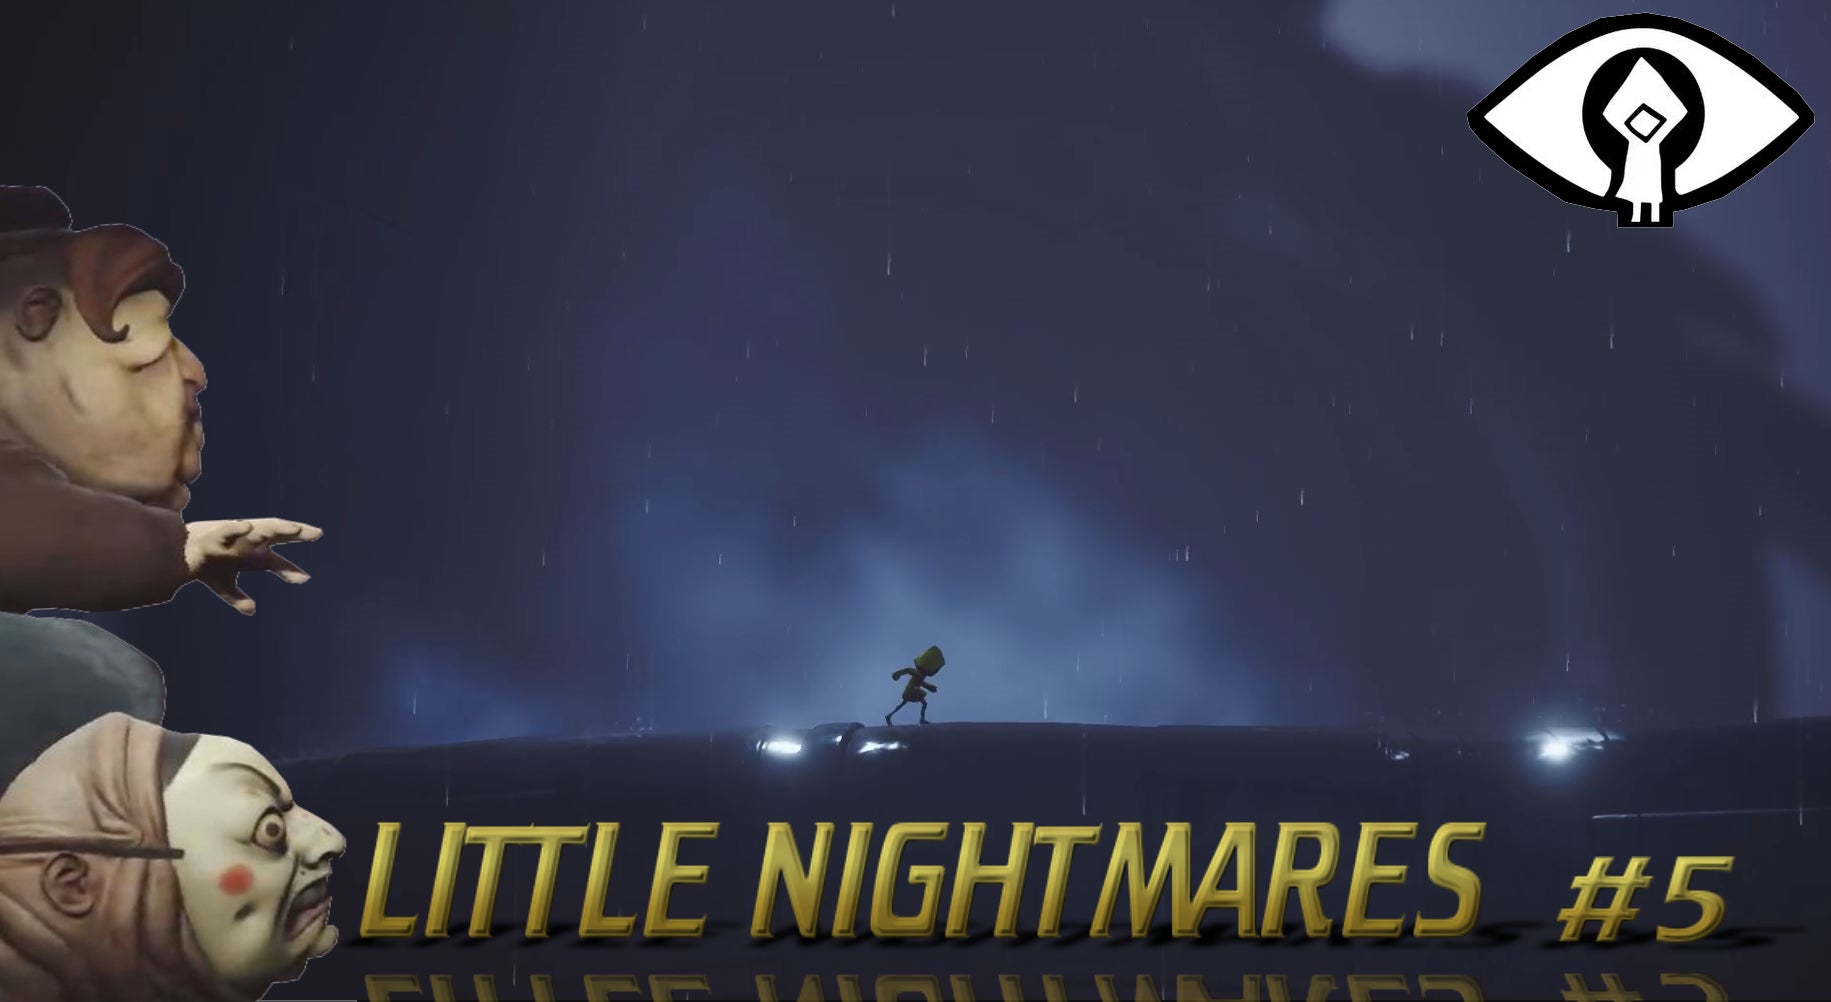 Little Nightmares 1 + 2 Compilation (PS4) – igabiba